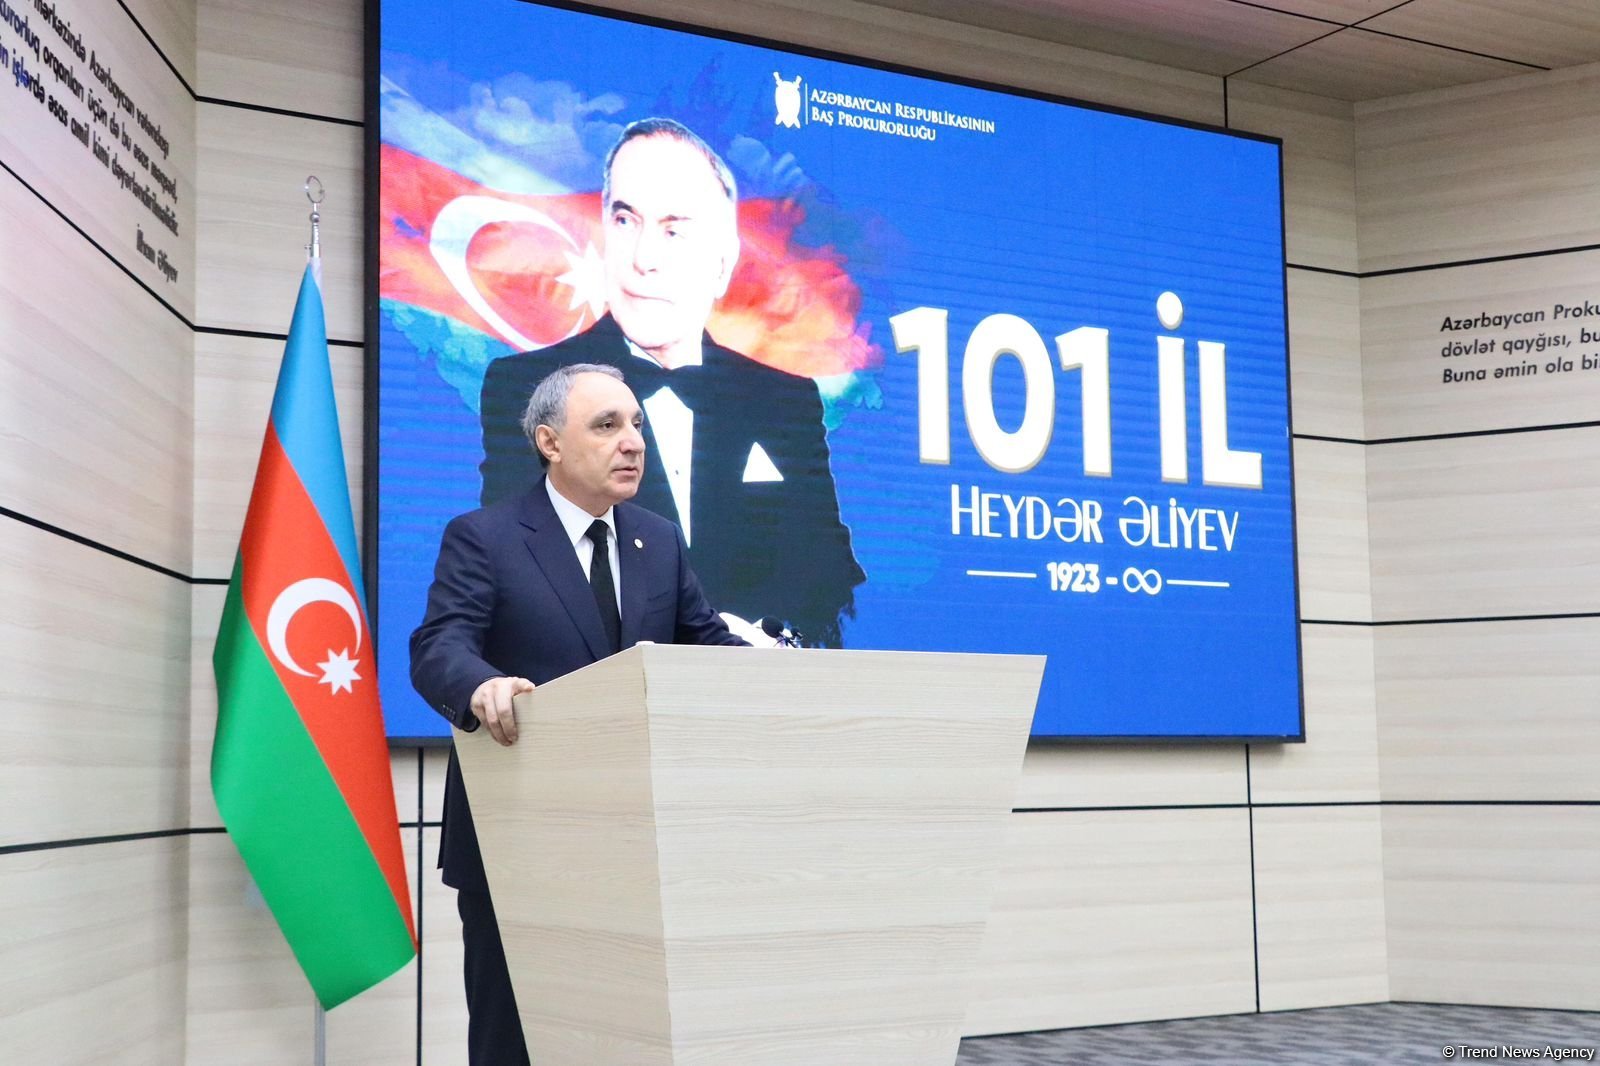 Great Leader Heydar Aliyev revered for historical value in Azerbaijan, ex-USSR - prosecutor general